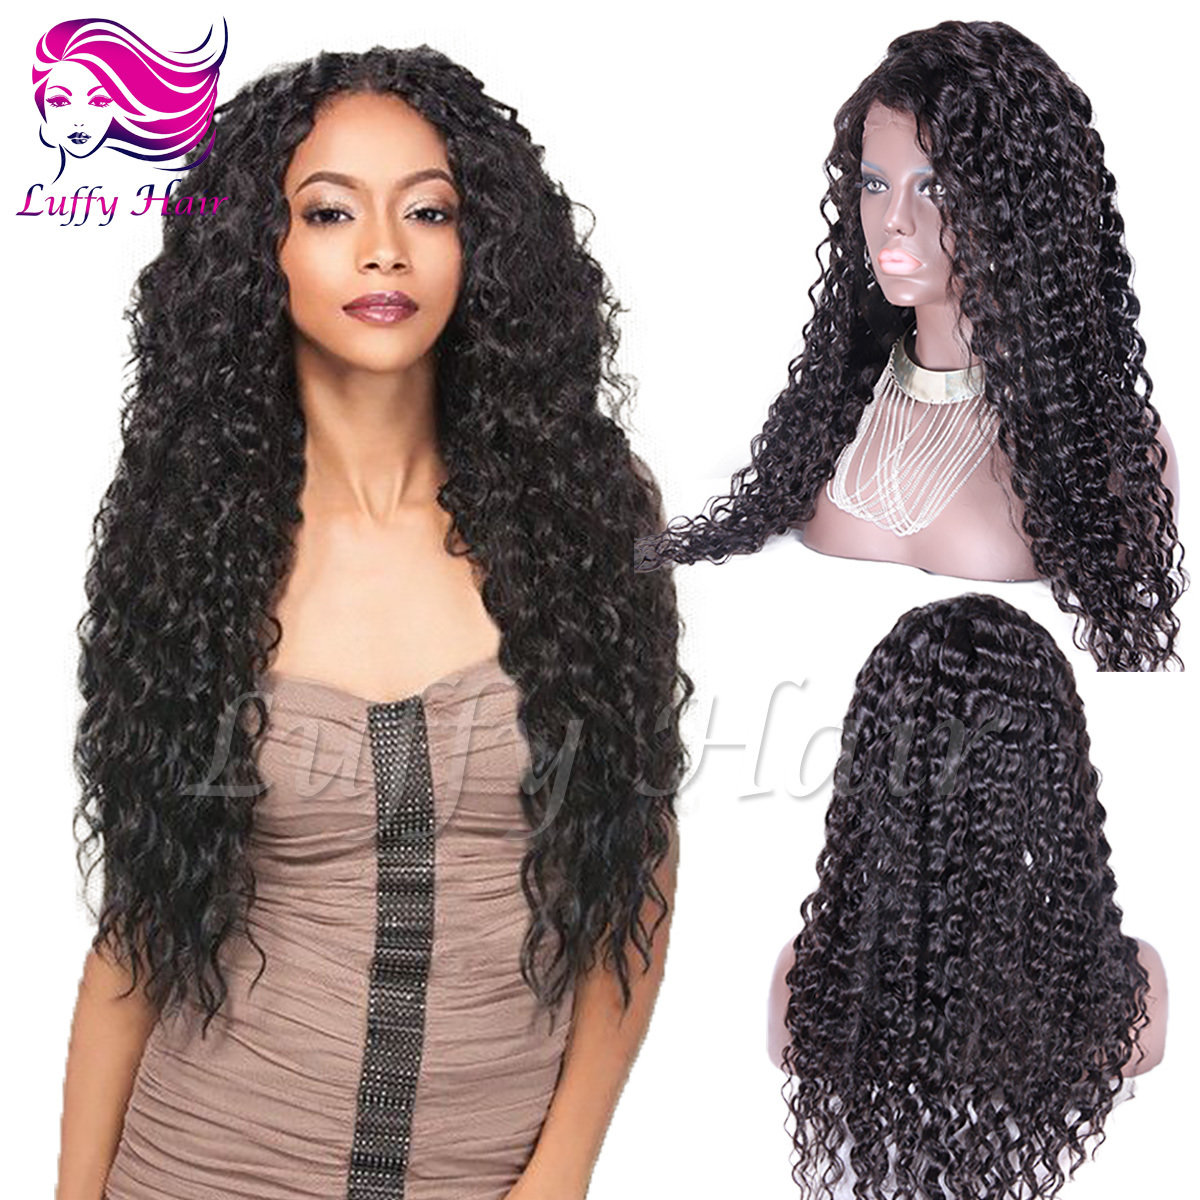 8A Virgin Human Hair Curly Wig - KWL035